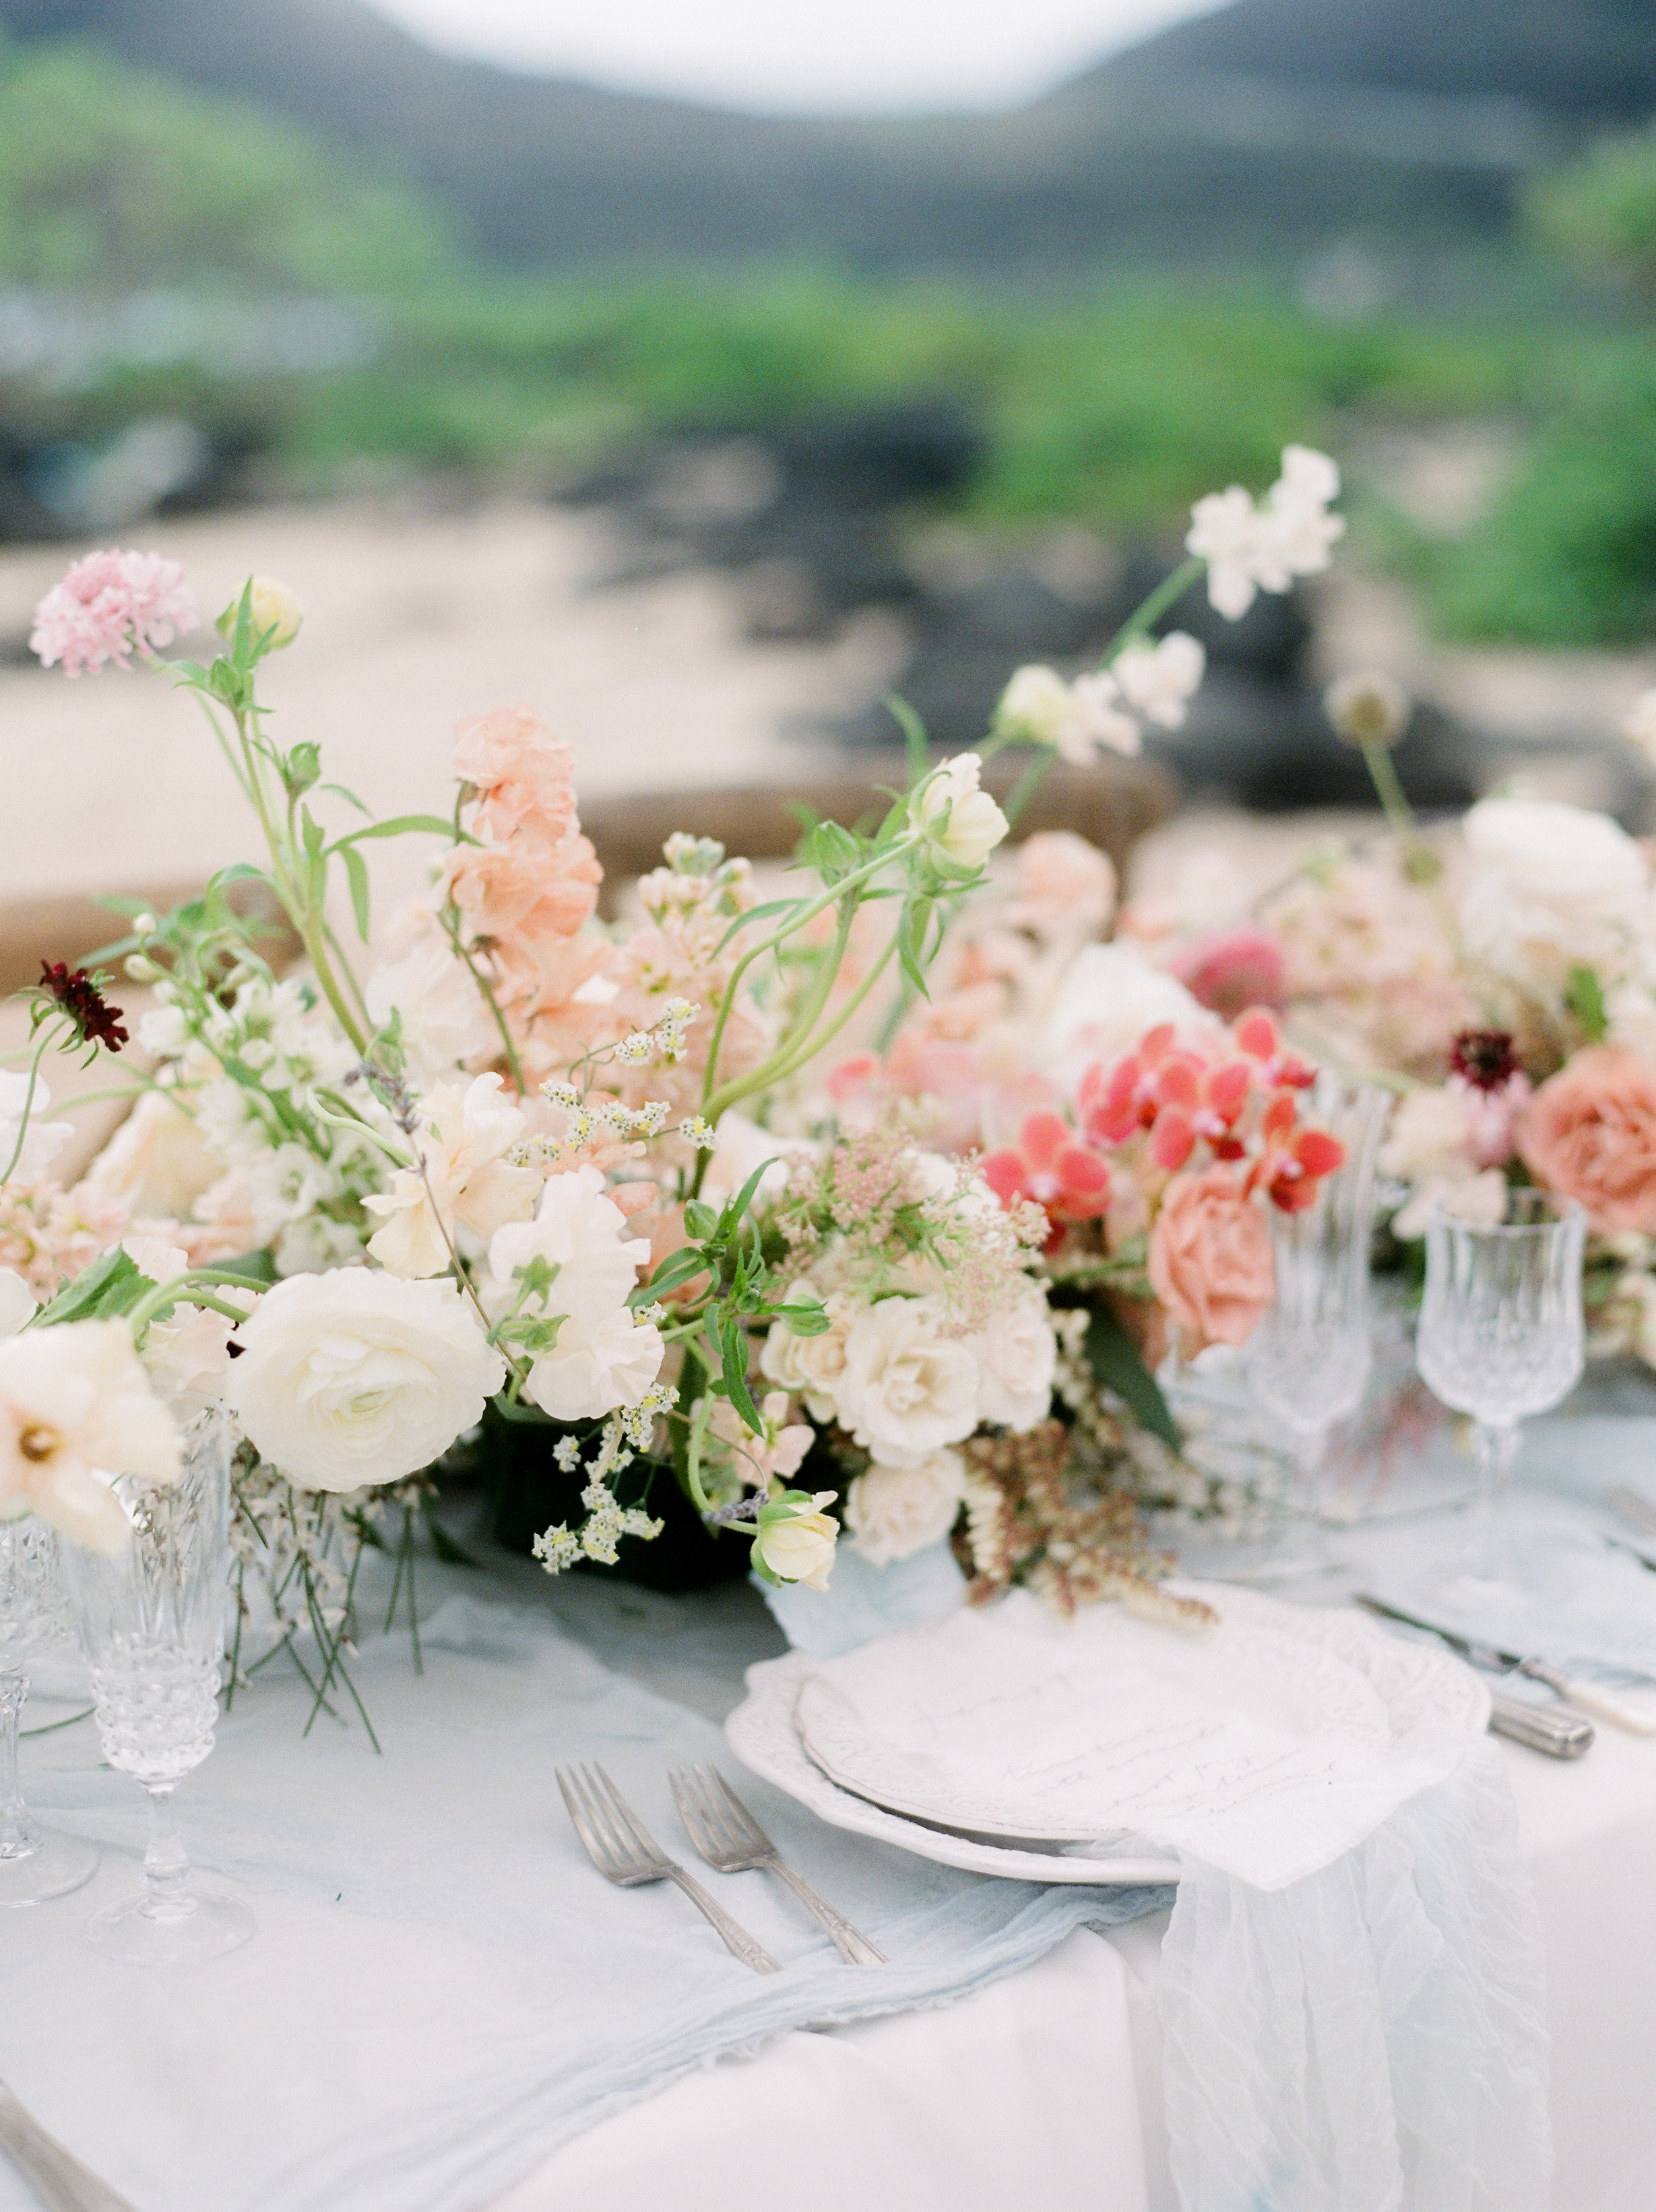 Stunning Summer Centerpieces Using In Season Flowers Martha Stewart Weddings 1551